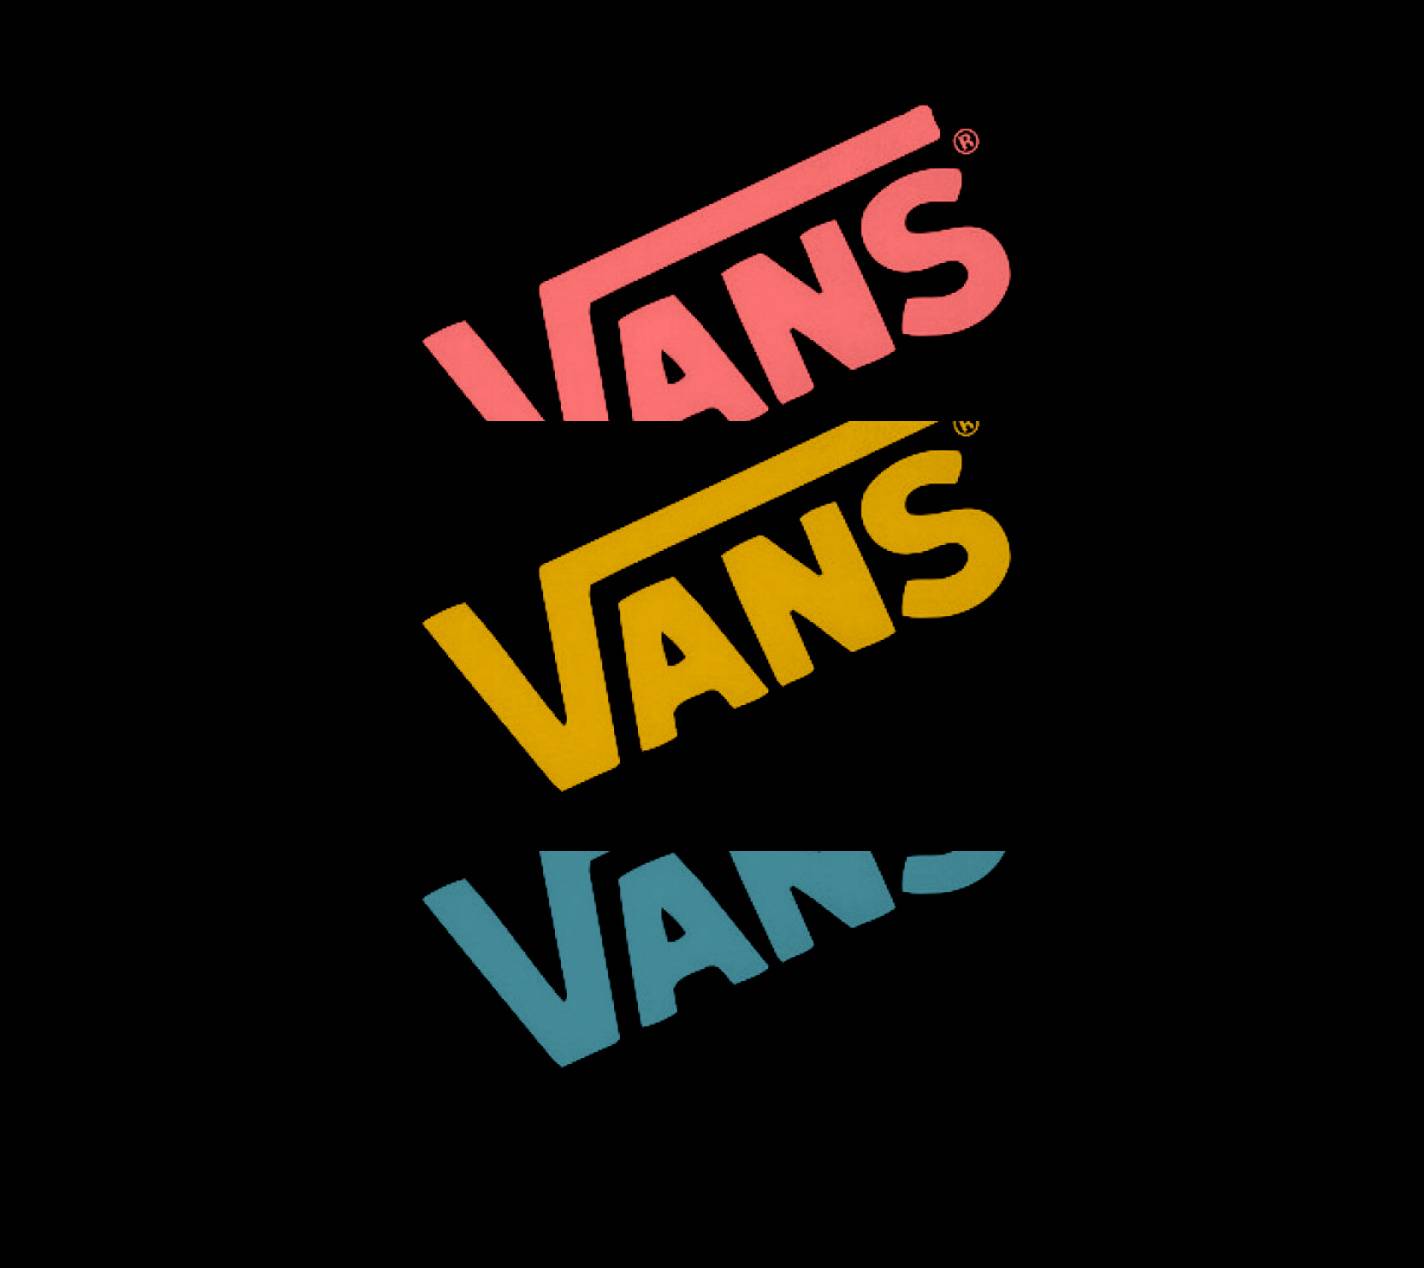 wallpaper vans logo